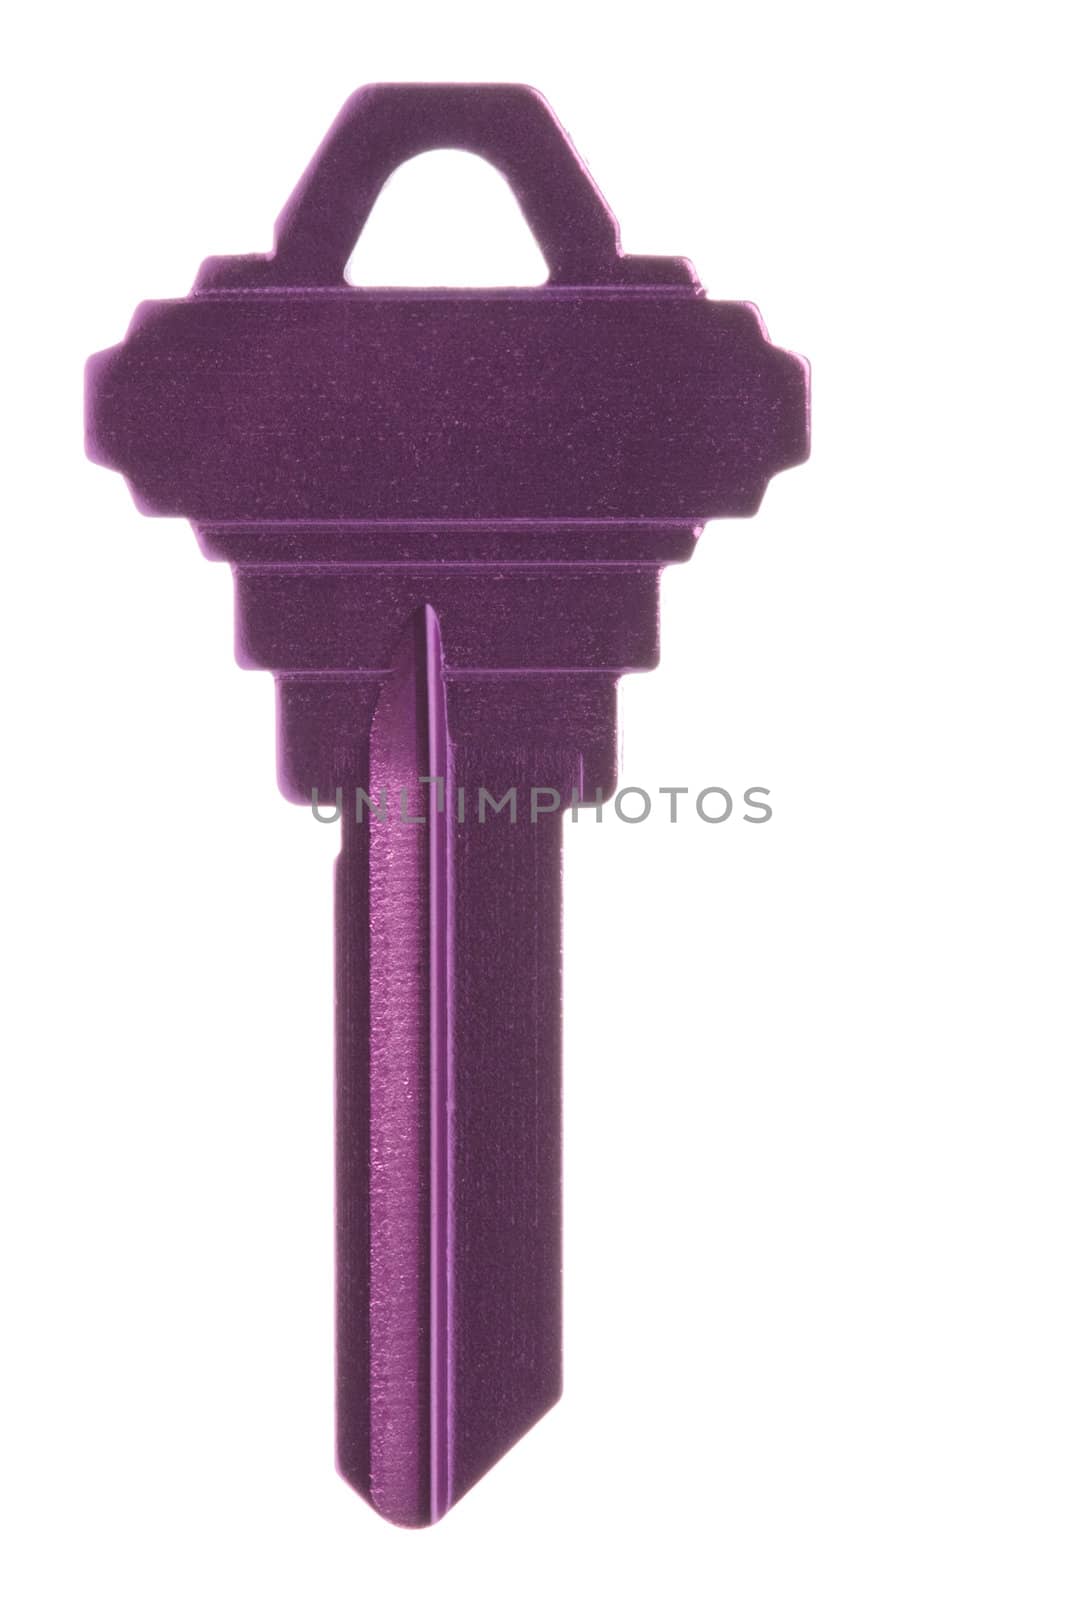 Purple Blank Key Macro Isolated by shariffc